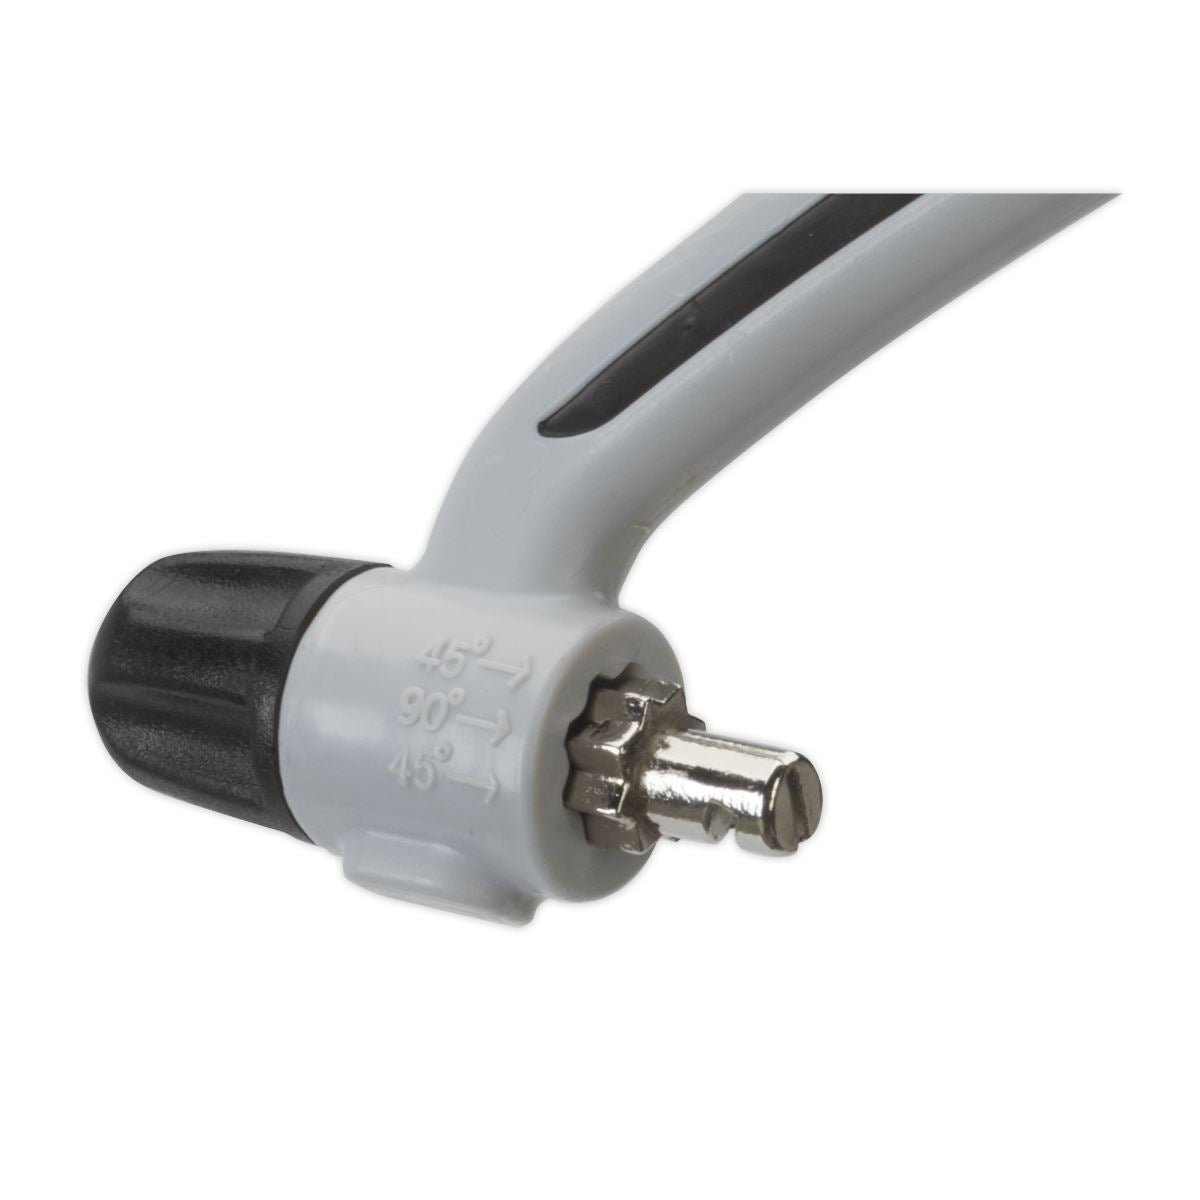 Sealey Premier Mini Professional Hacksaw with Adjustable Blade 150mm